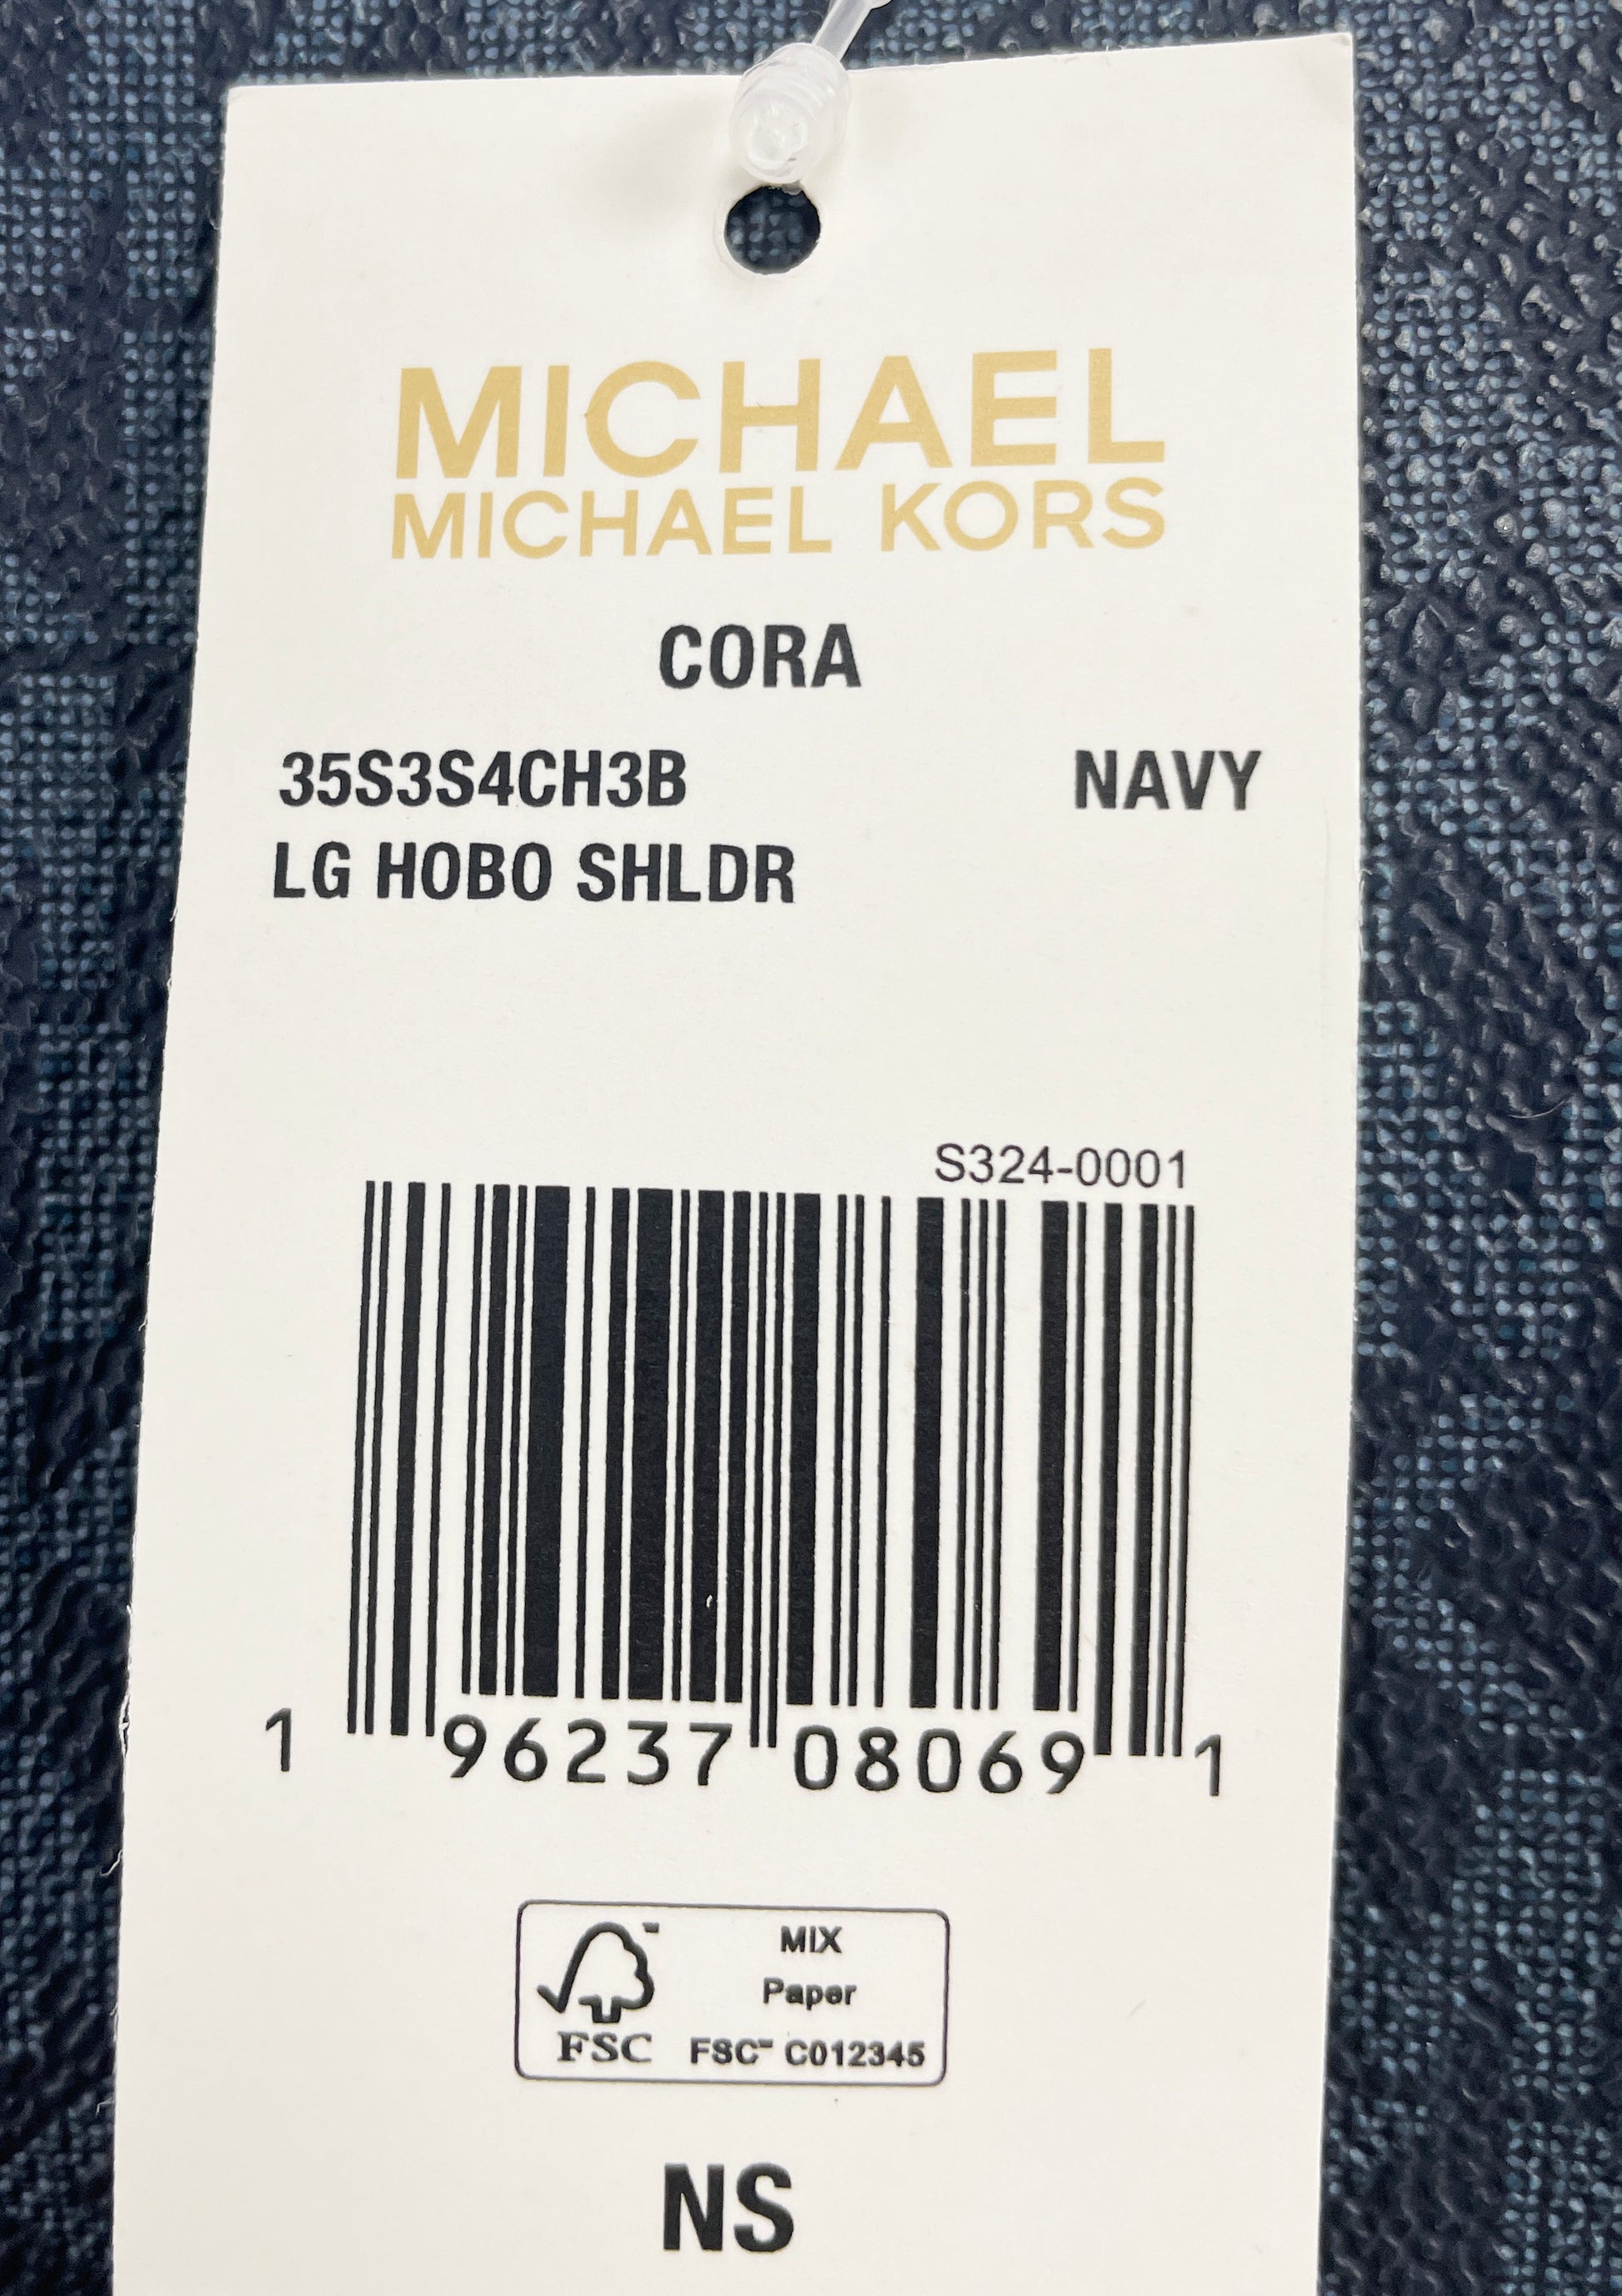 Michael Kors Cora Large Navy Crossbody Bag